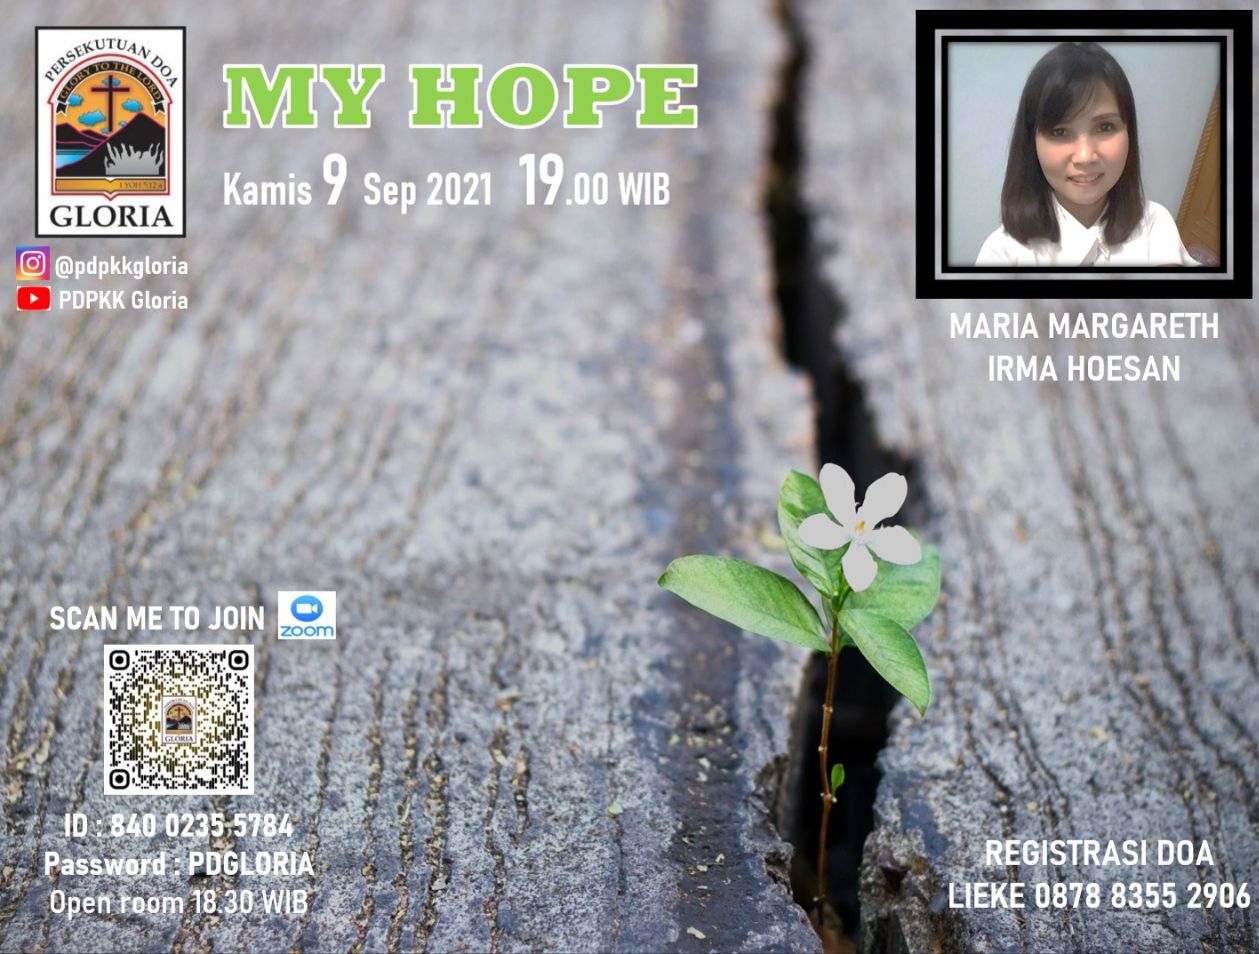 Anda diundang hadir bersekutu bersama secara online dengan tema ”MY HOPE”